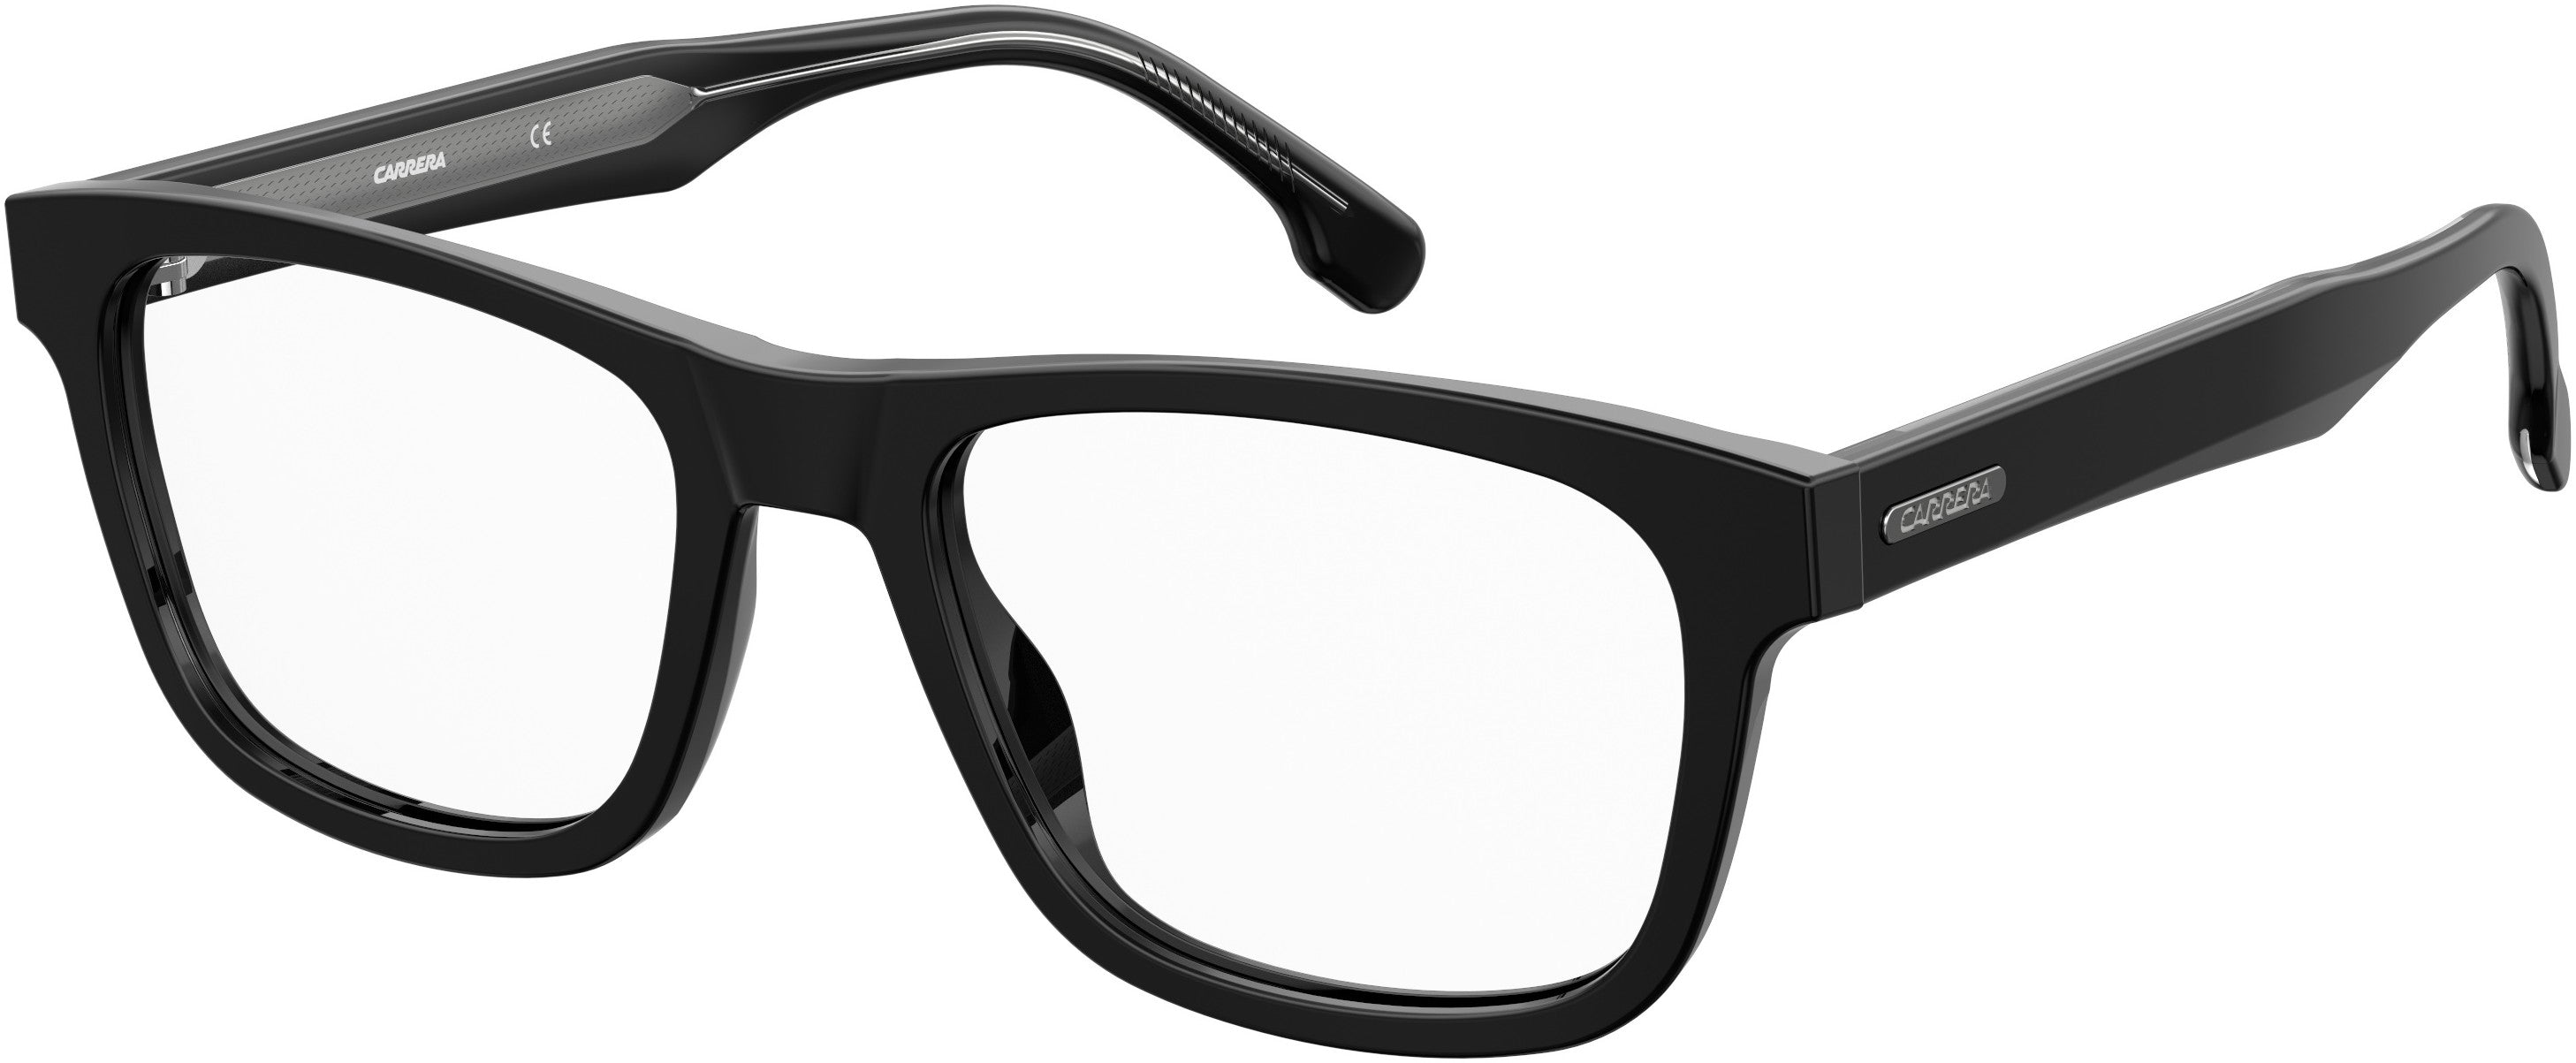  Carrera 249 Rectangular Eyeglasses 0807-0807  Black (00 Demo Lens)